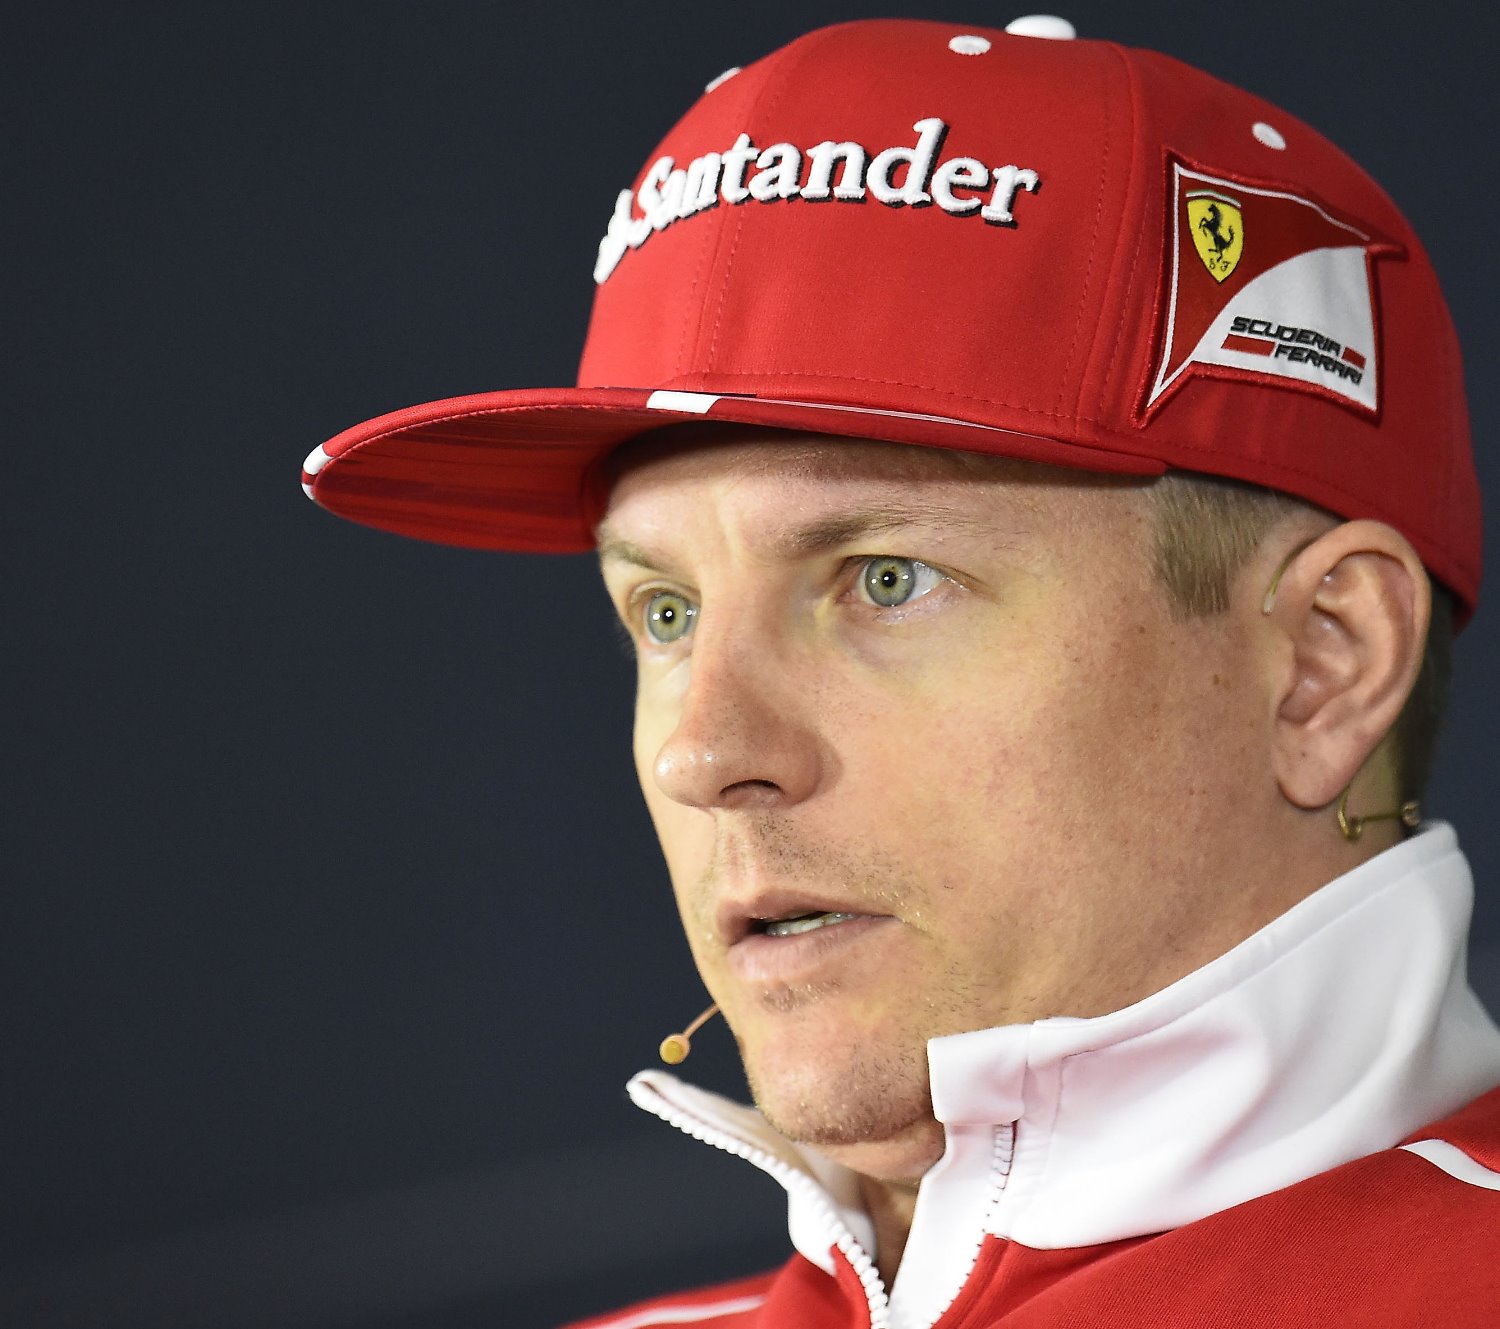 Kimi Raikkonen has been beaten badly by Vettel so far this year